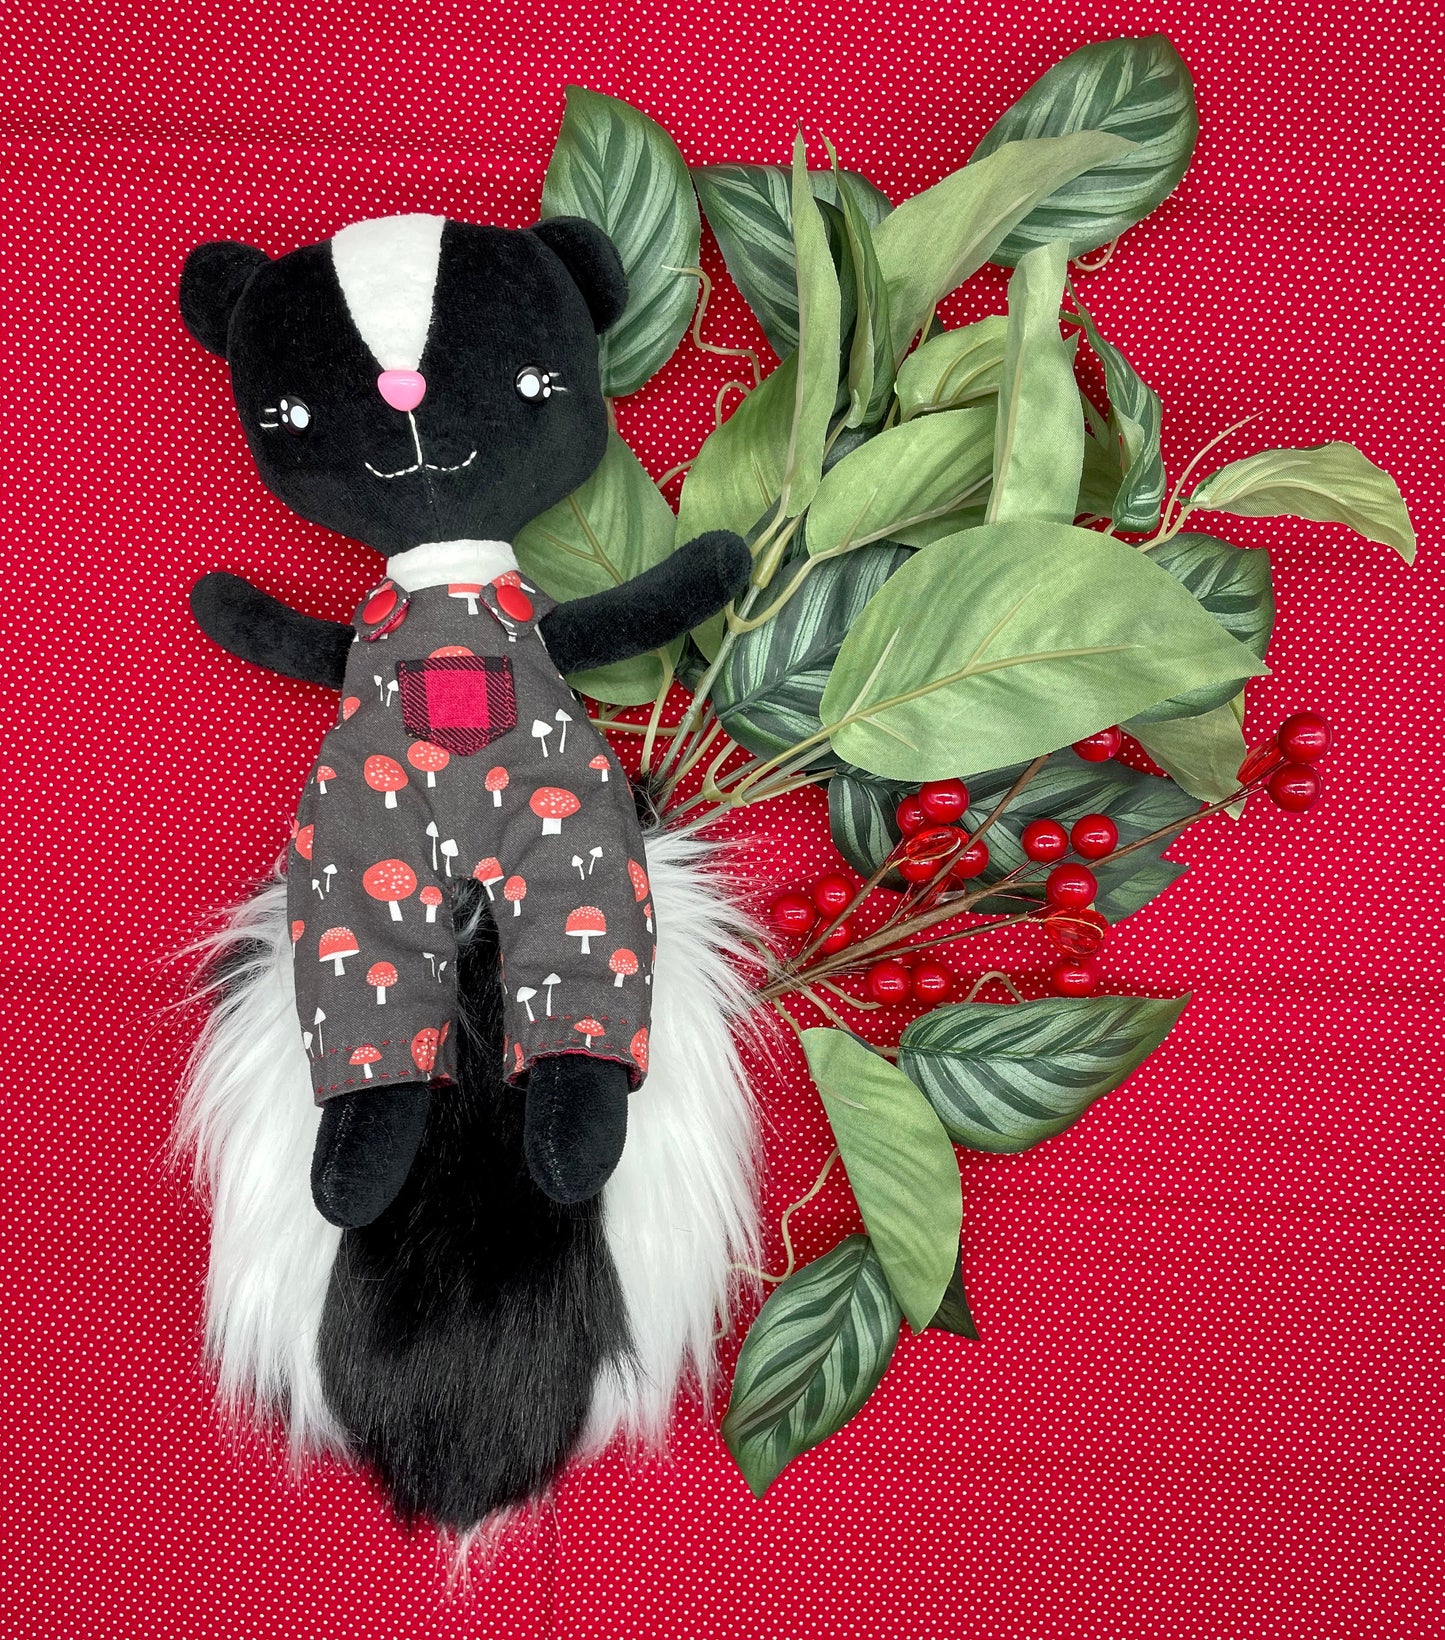 Handmade BABY SKUNK Doll, "PEPITO", Stuffed skunk, stuffed animals, boy doll, baby animals, skunk toys, gift for kids, skunk plushie